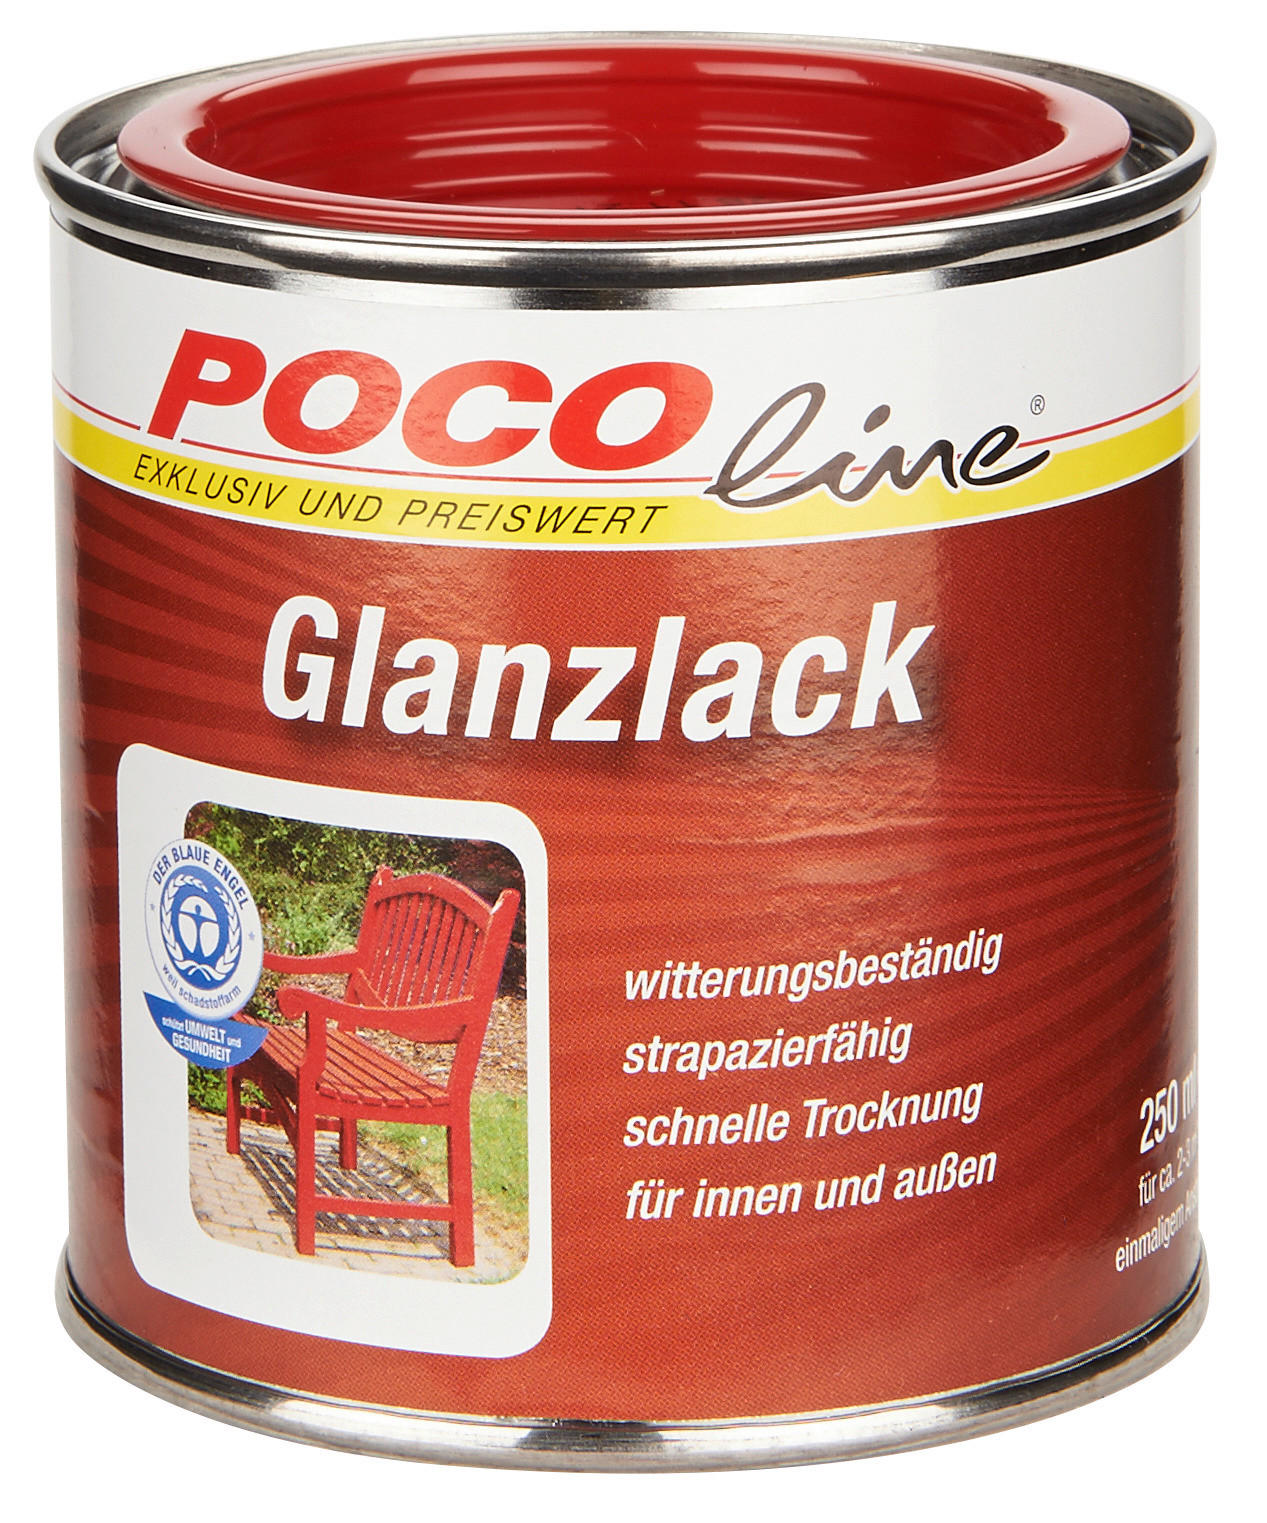 POCOline Acyl Buntlack feuerrot glänzend ca. 0,25 l Glanzlack_Acryl_2in1 250ml - feuerrot (250ml)